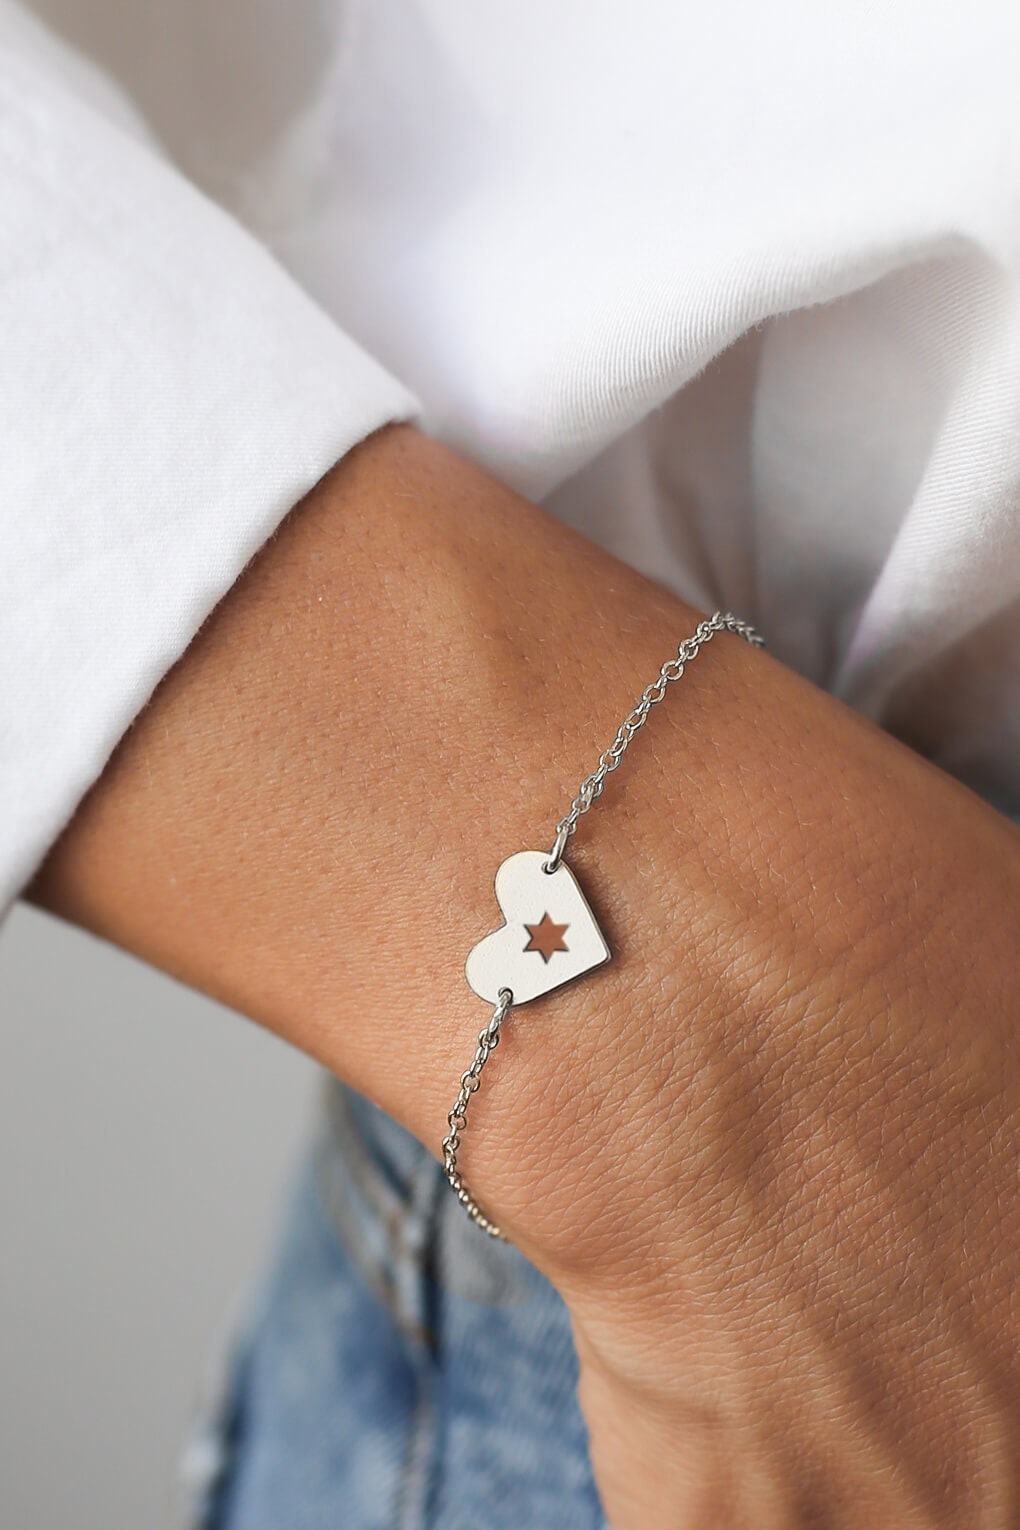 Israel at Heart Bracelet, Support Israel Jewelry, Stackable Bracelet, Star  of David Jewelry, Heart Shape Charm - Etsy